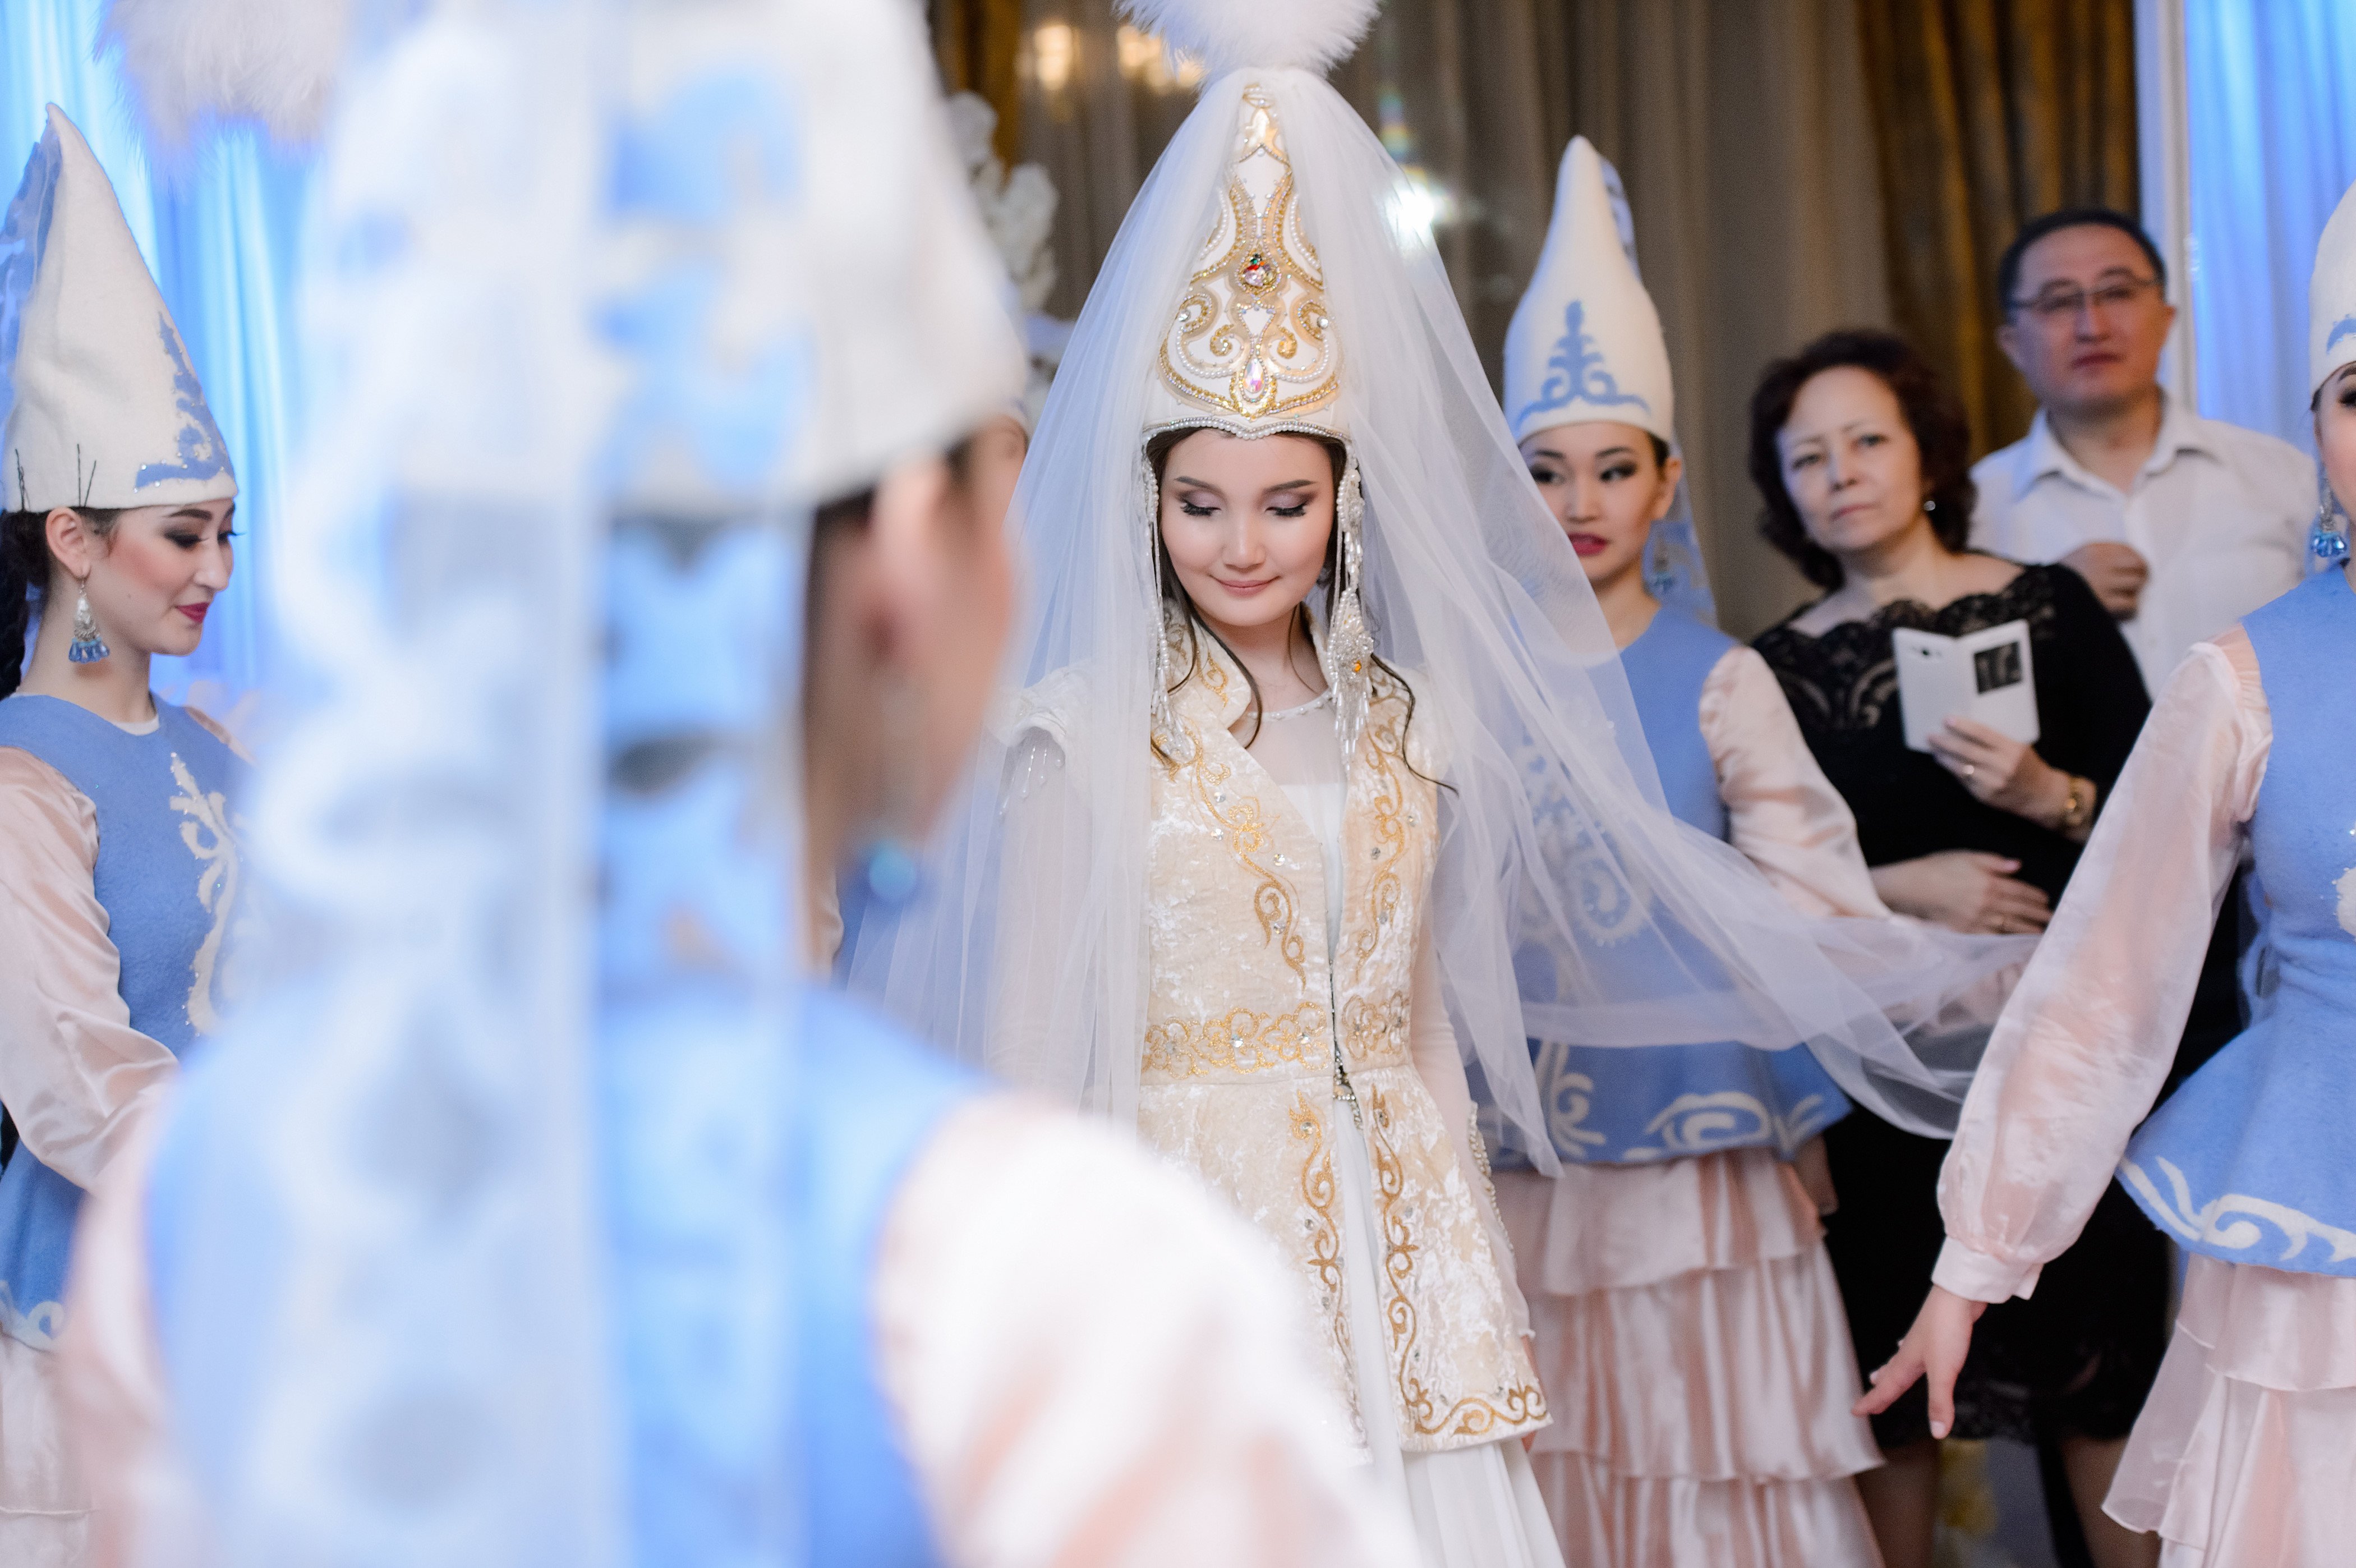 Қыздар жиналысы. Казахская традиция кыз узату. Казахская свадьба беташар. Казахская свадьба кыз узату. Казахская невеста в саукеле.